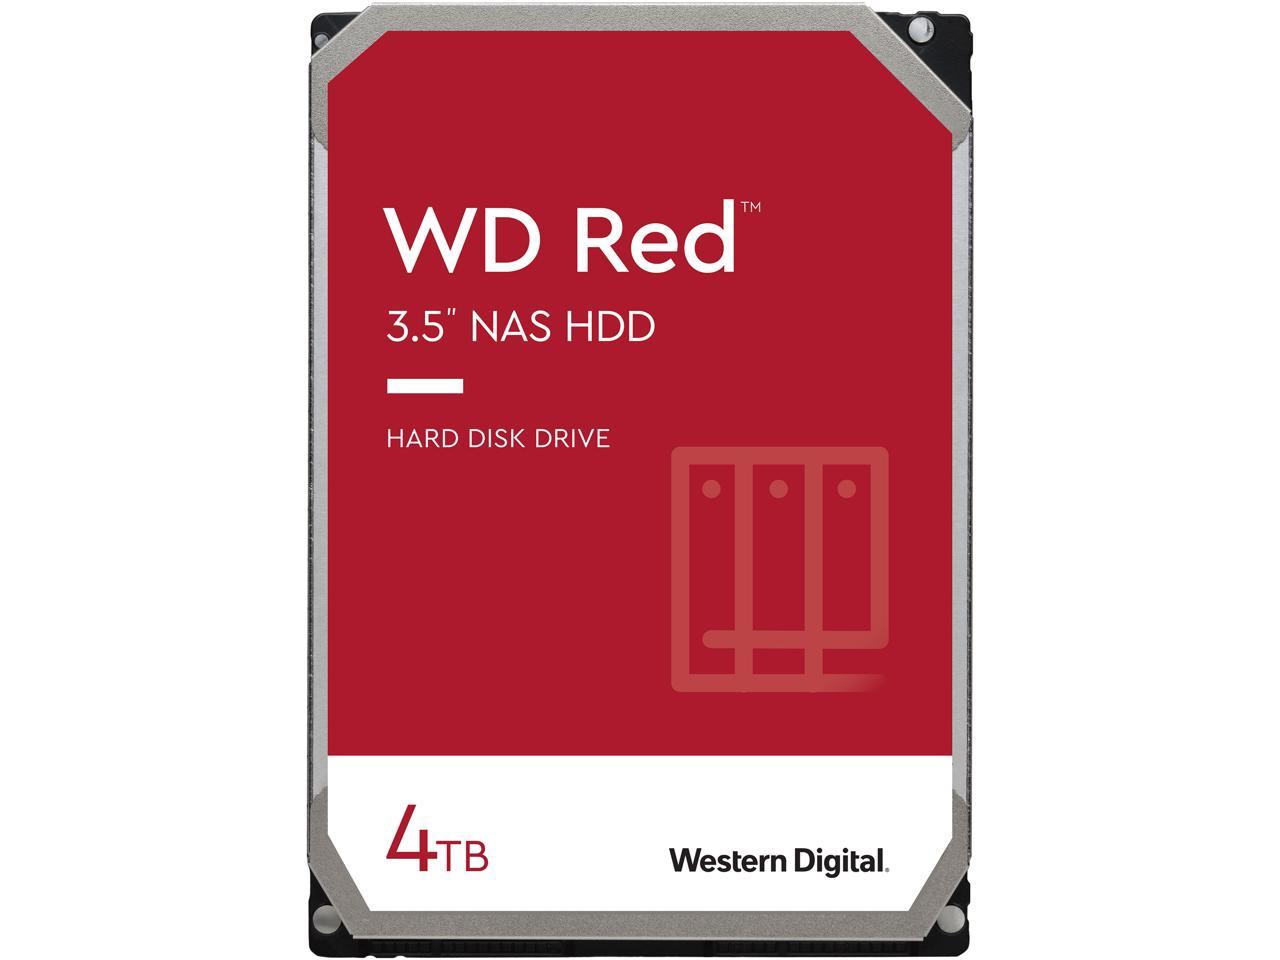 4TB WD Red NAS Hard Drive @Newegg $66